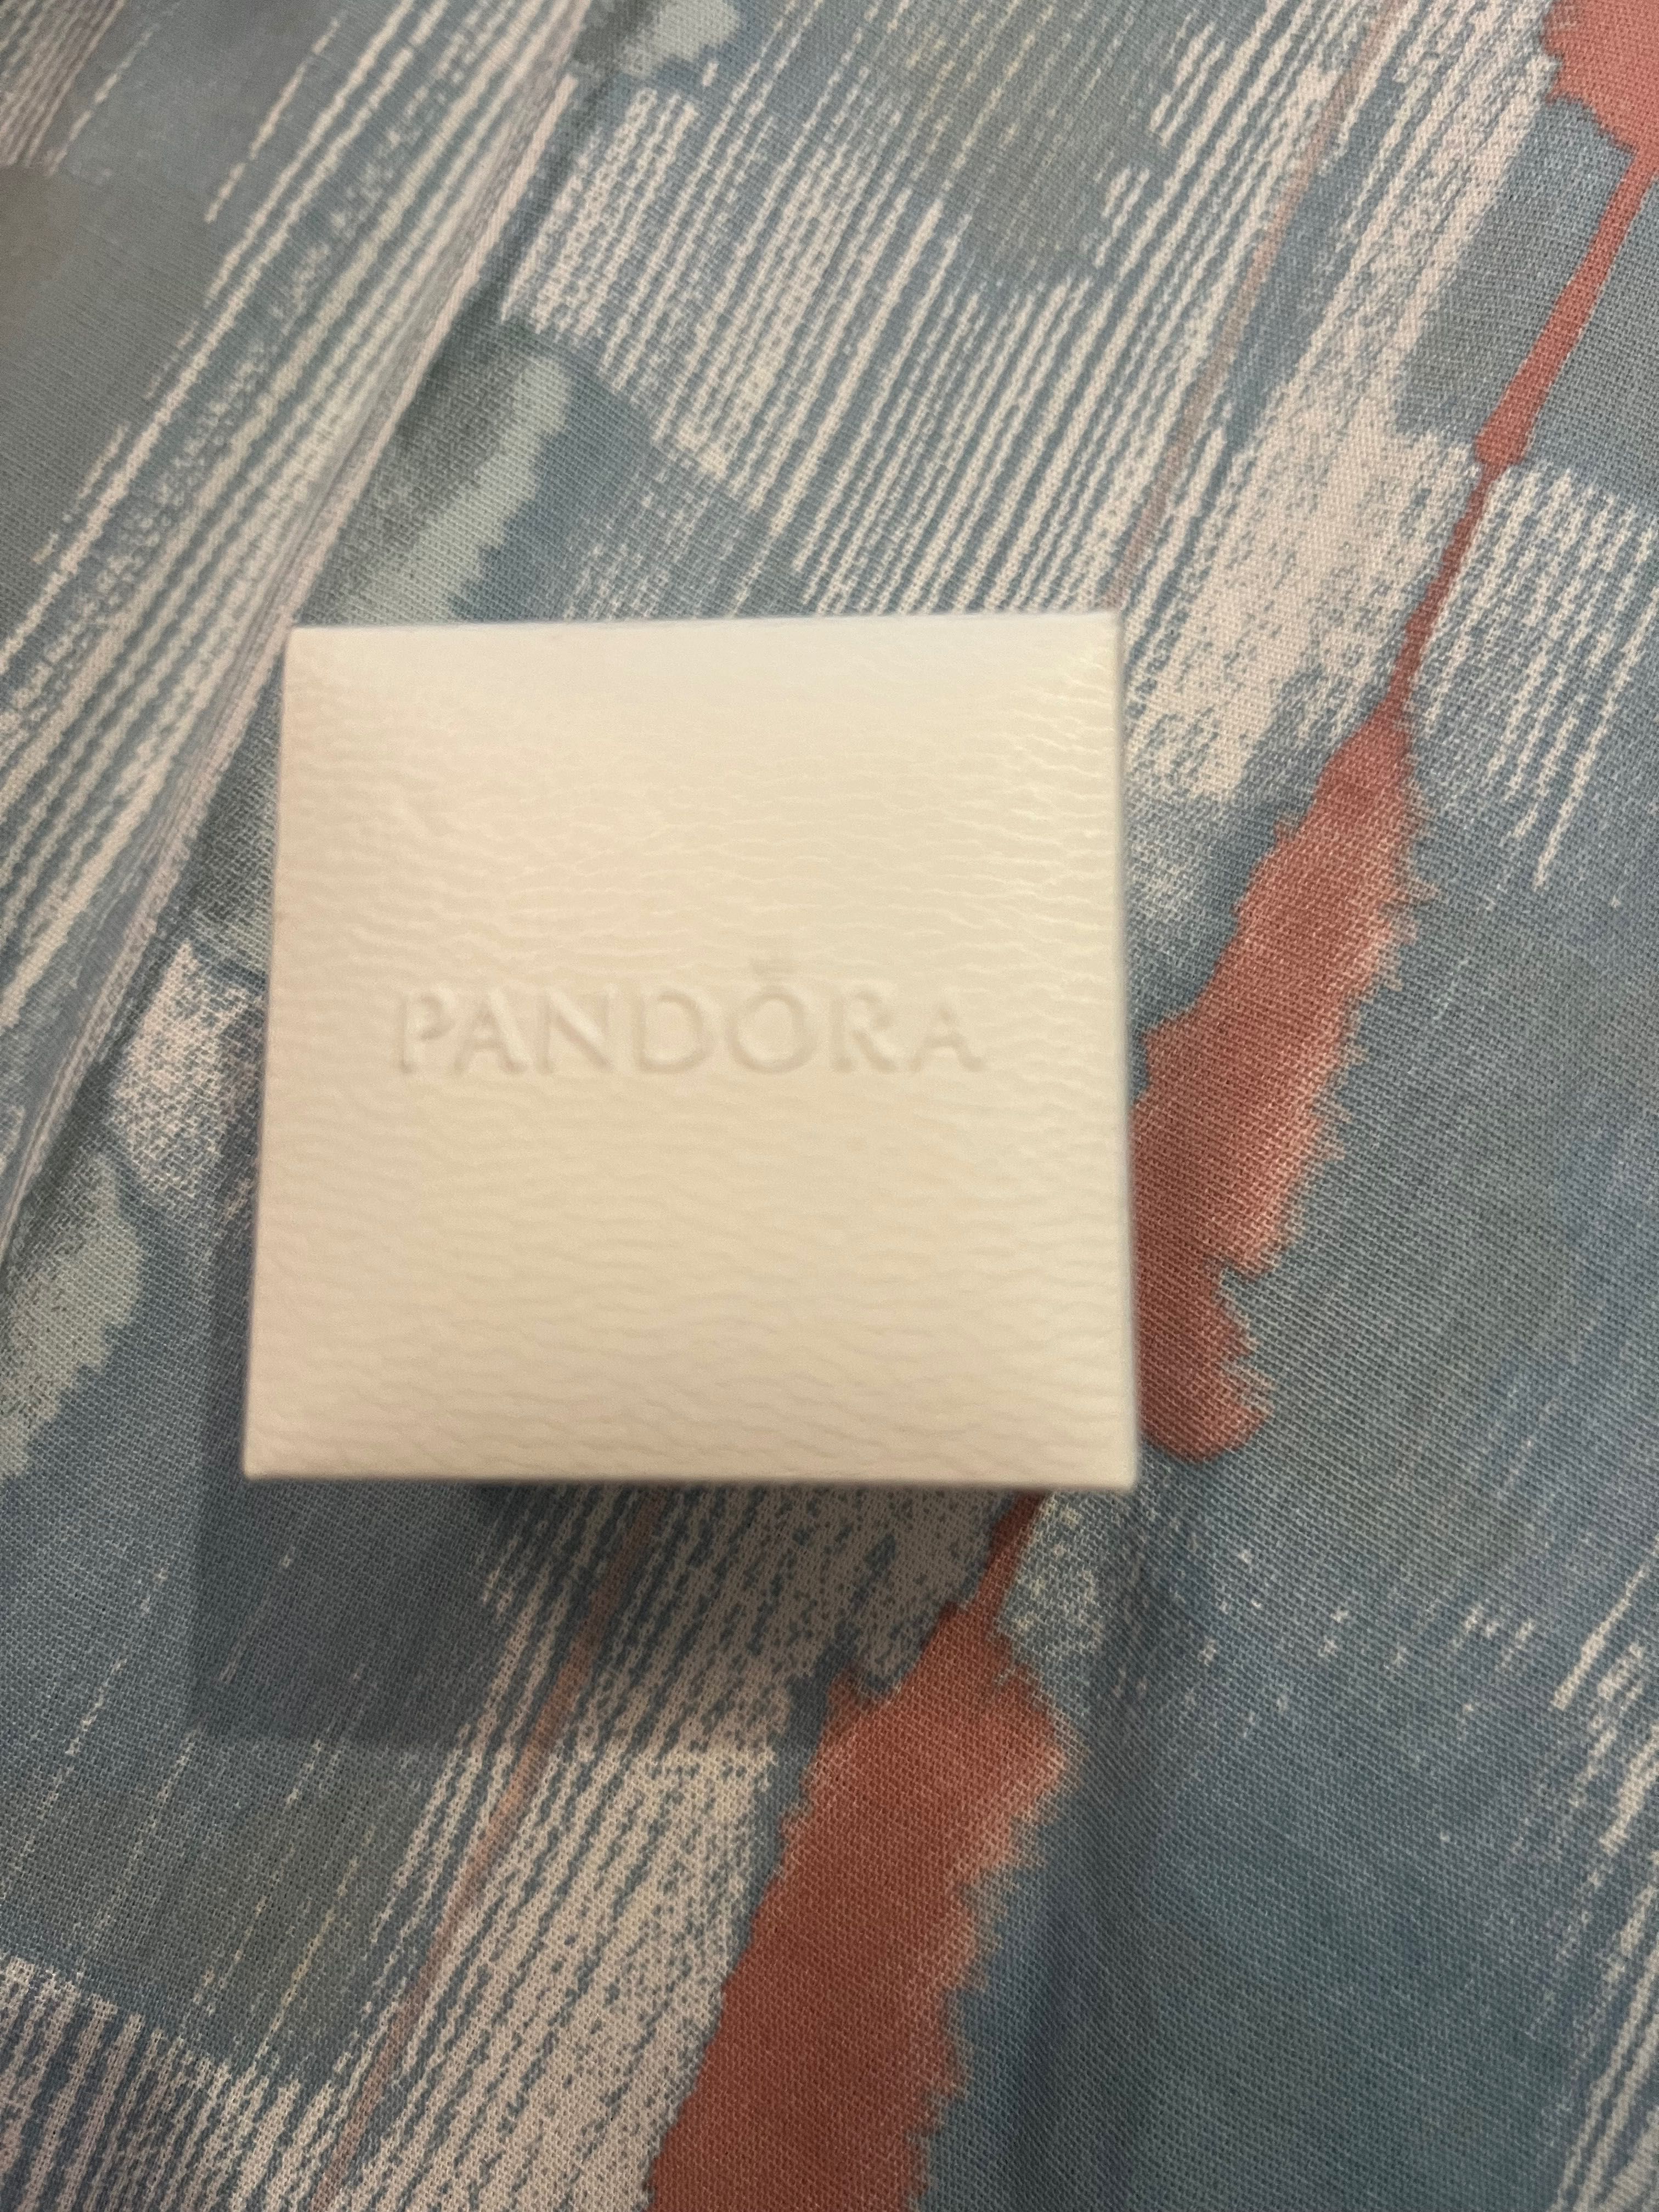 Pandora висулка around the world